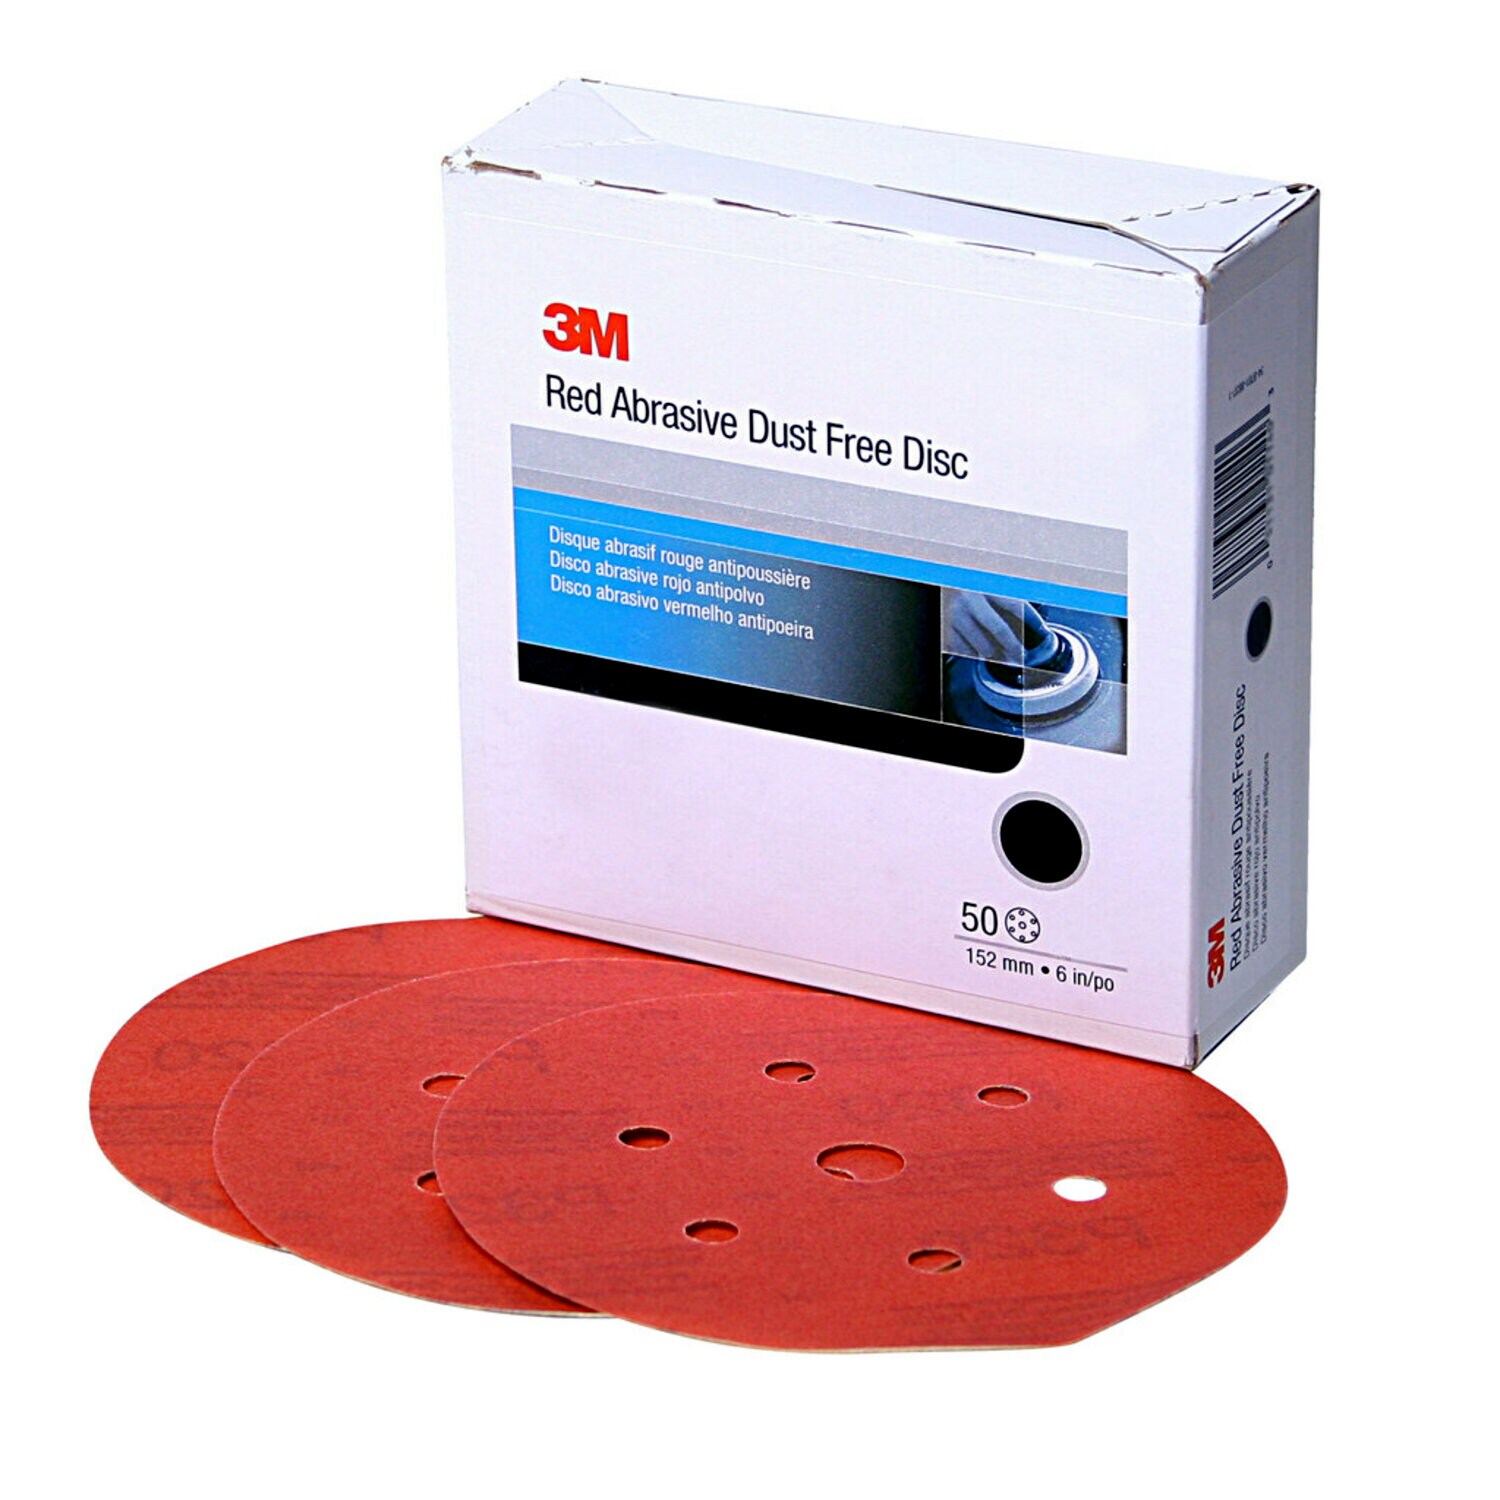 7000045461 - 3M Hookit Red Abrasive Disc Dust Free, 01148, 6 in, 40, 25 discs per
carton, 6 cartons per case